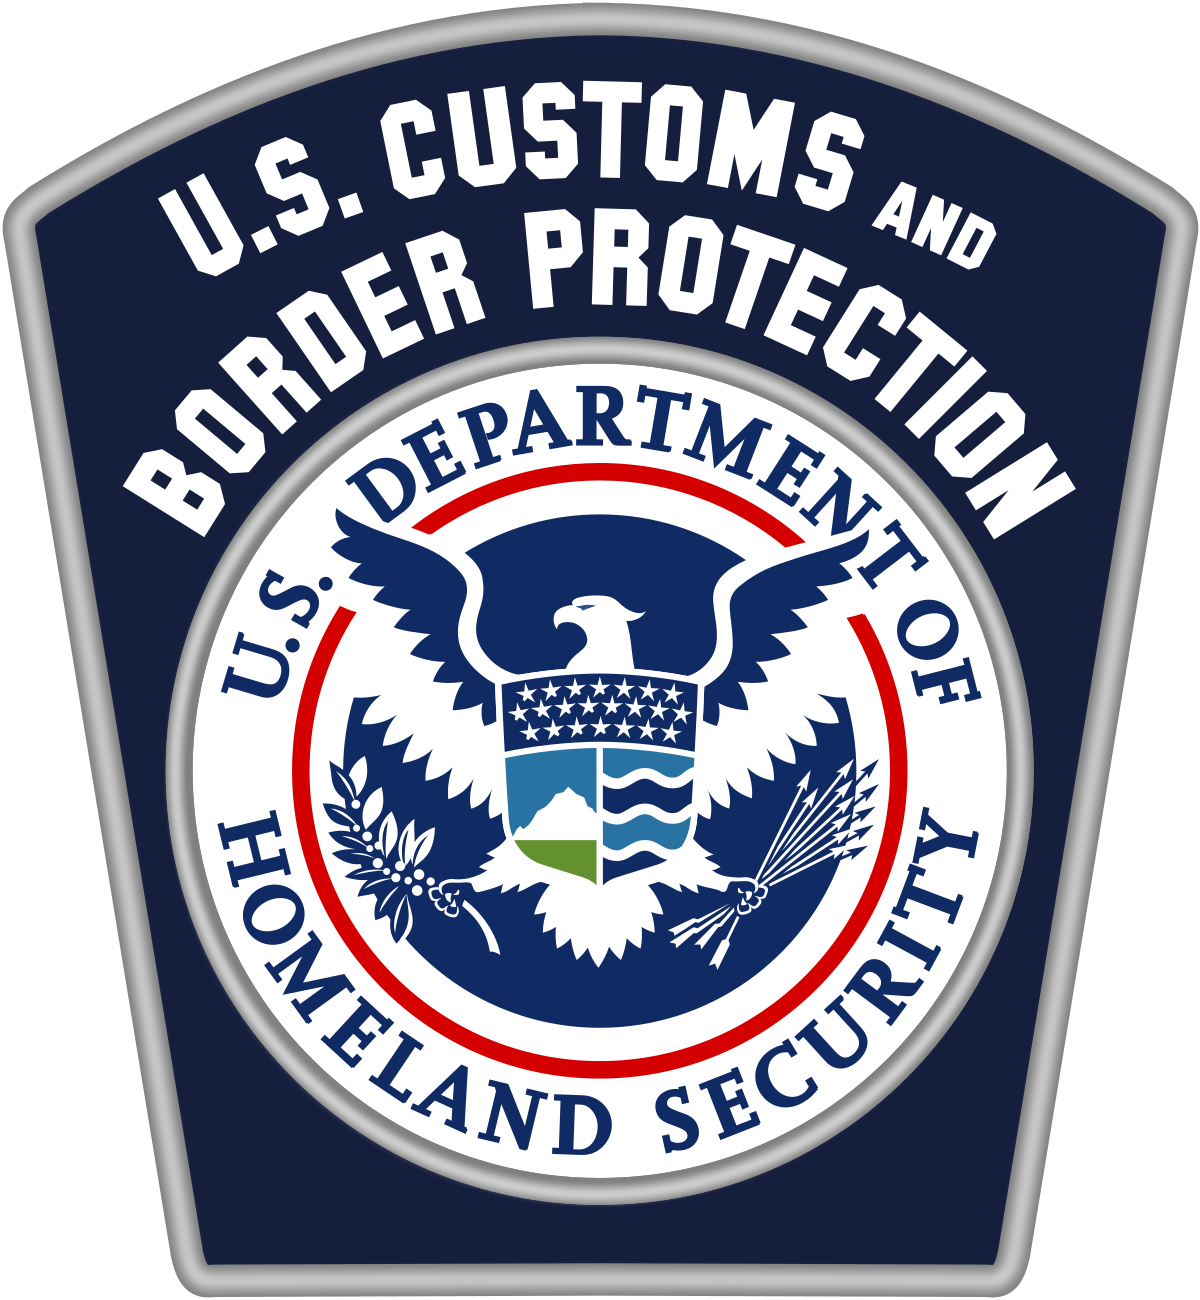 border protection